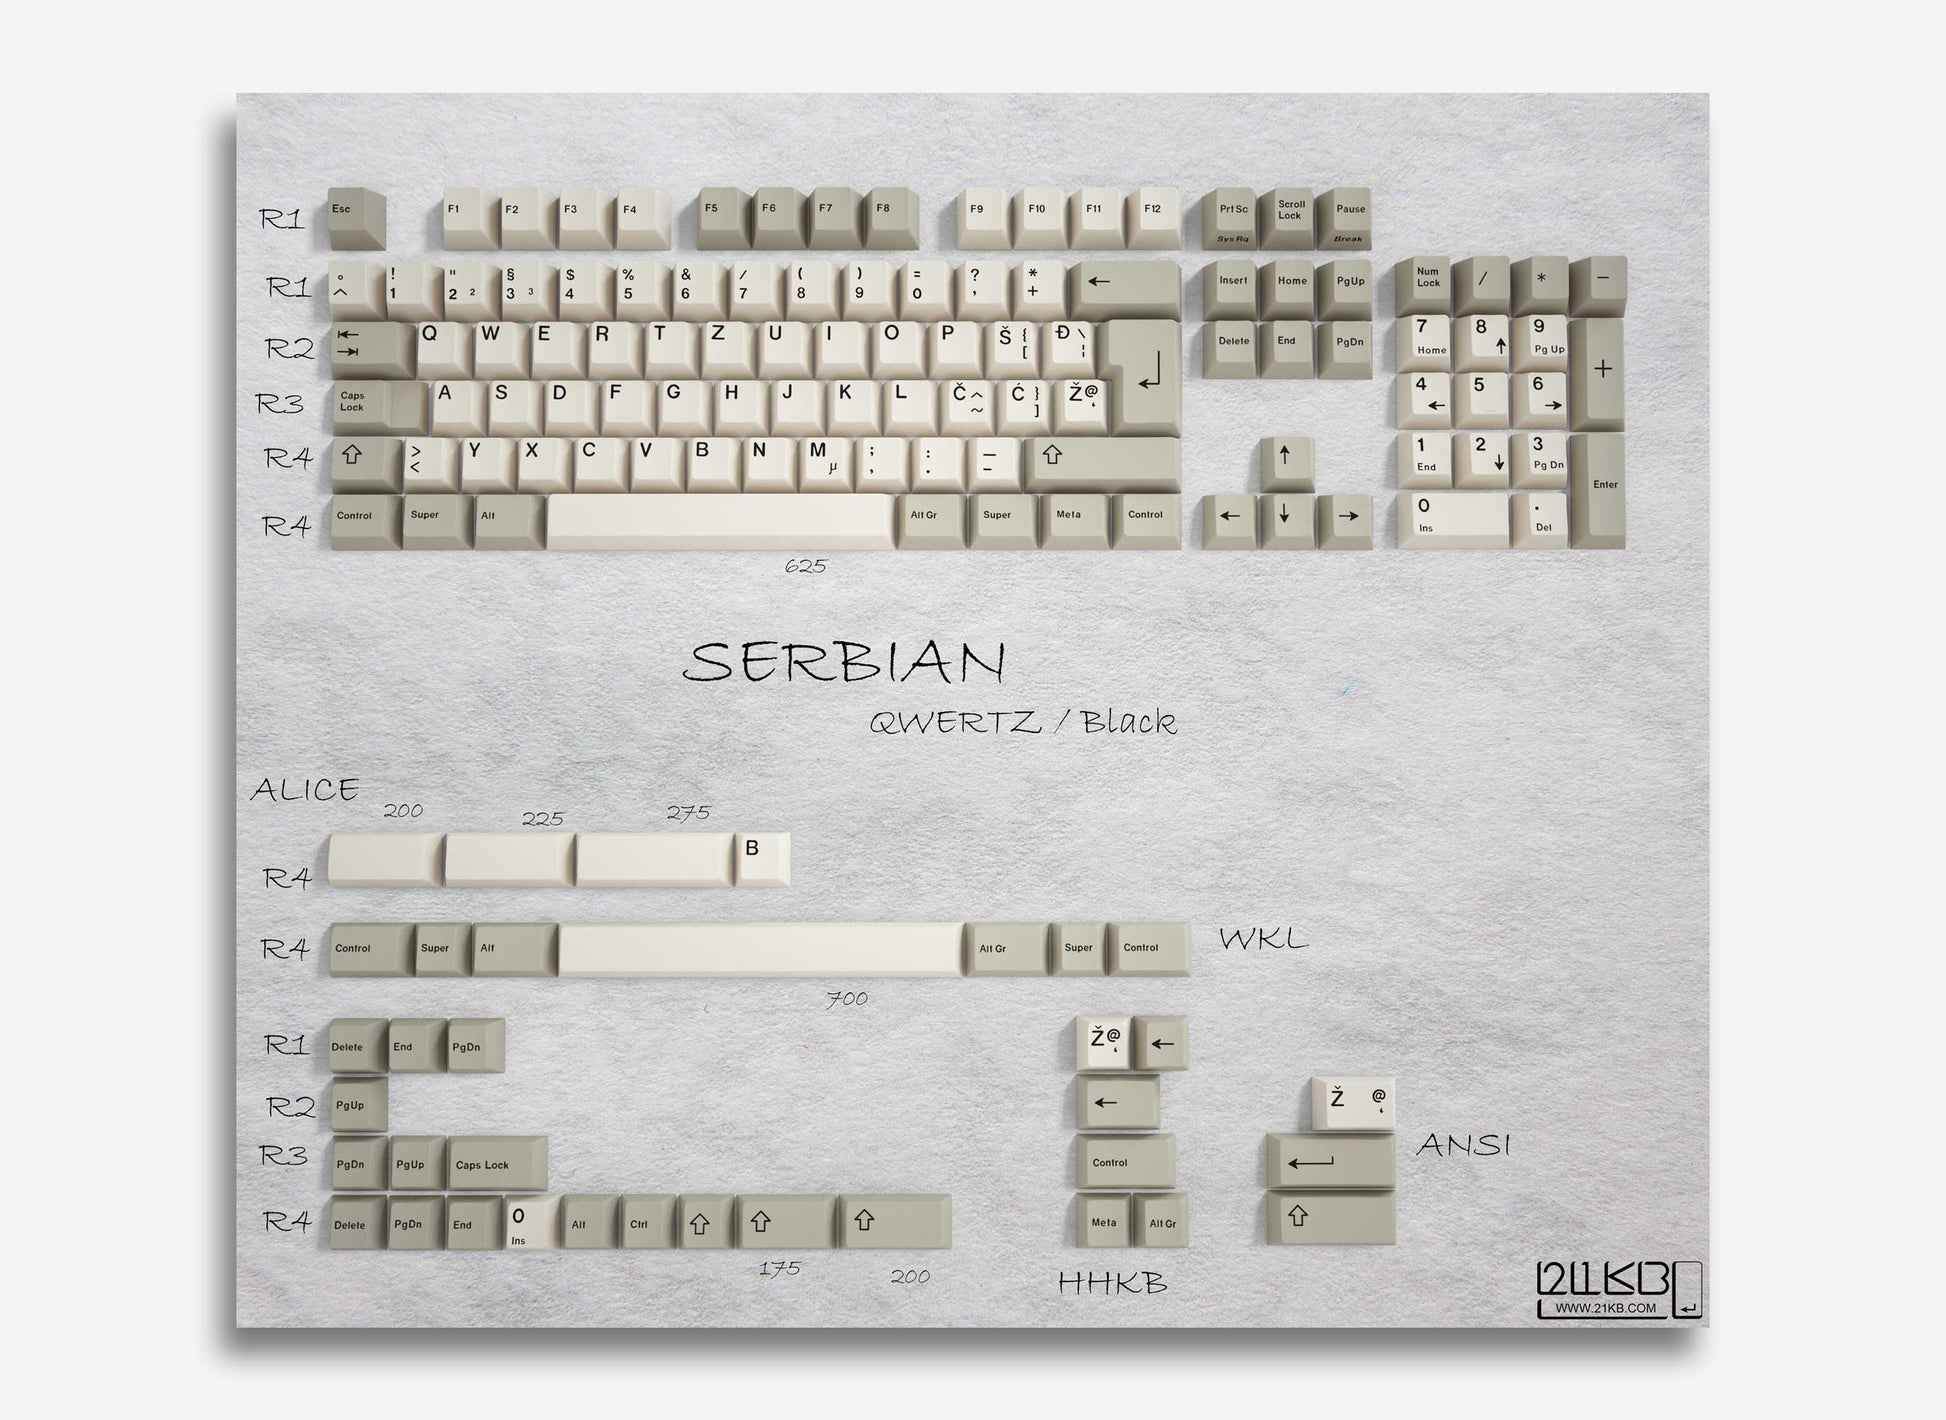 21KB Serbian QWERTZ Classic Retro Beige Keycap Set